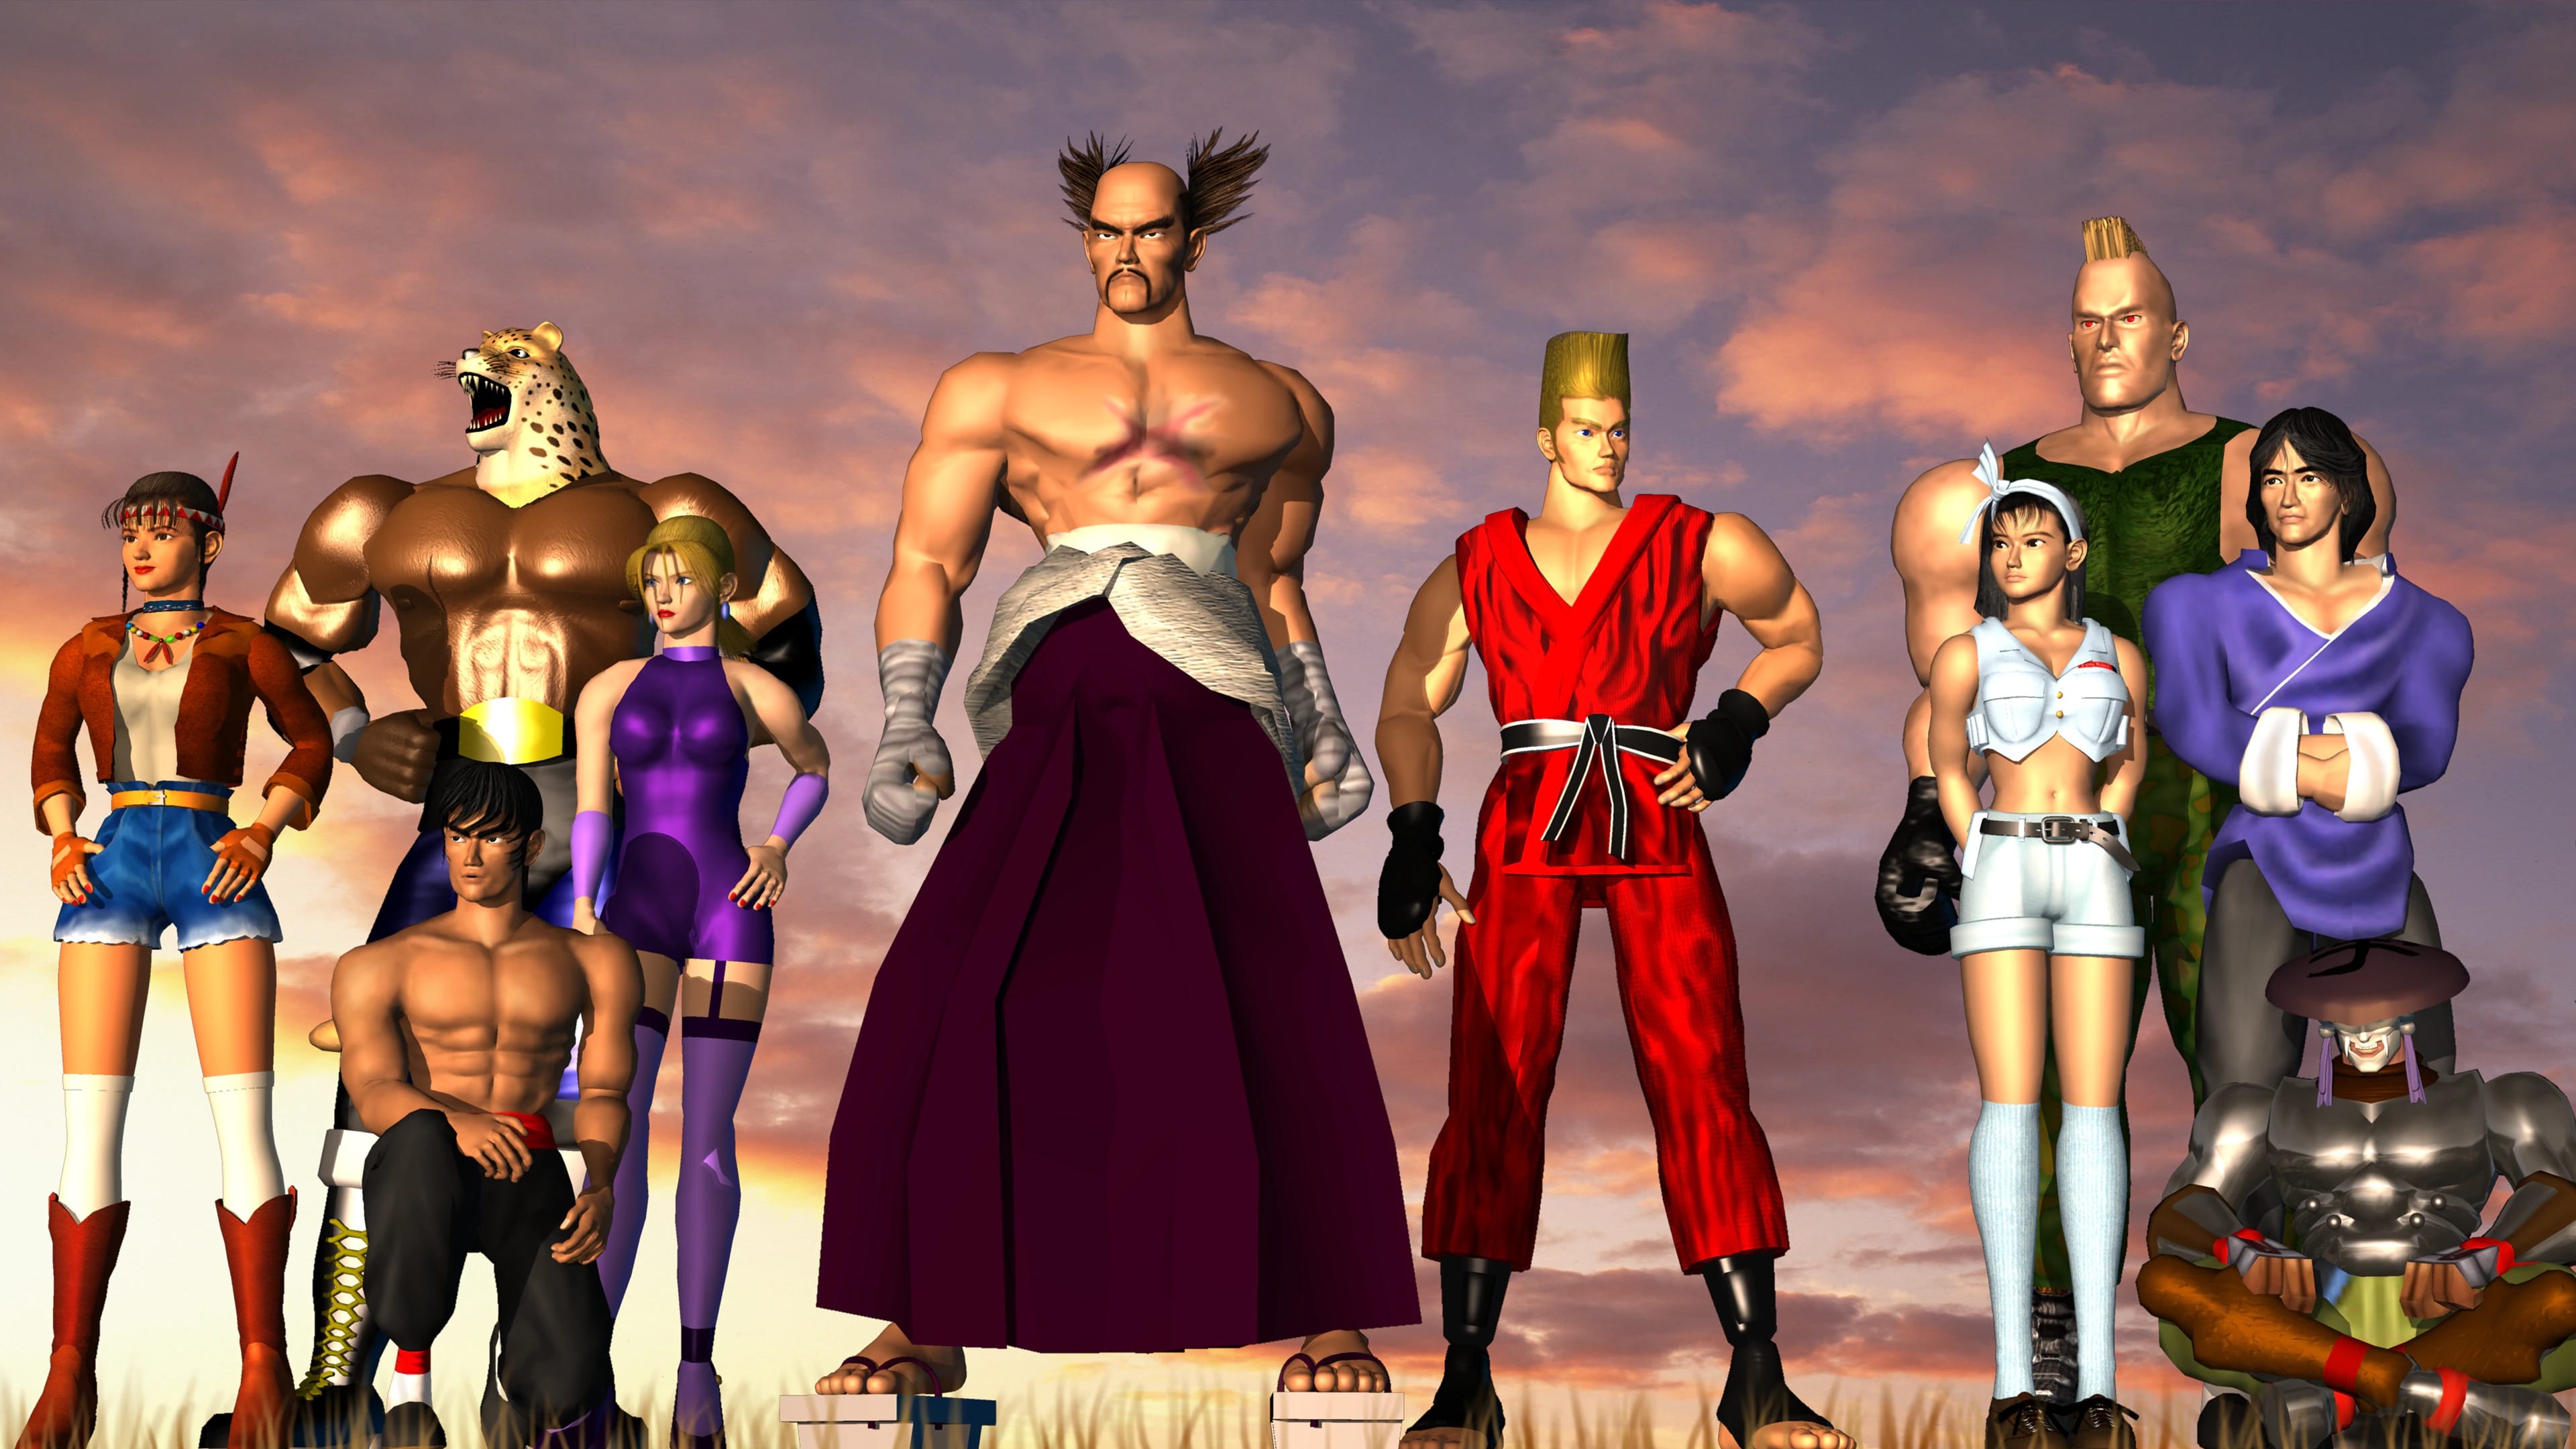 Tekken 2 characters in promotional material 